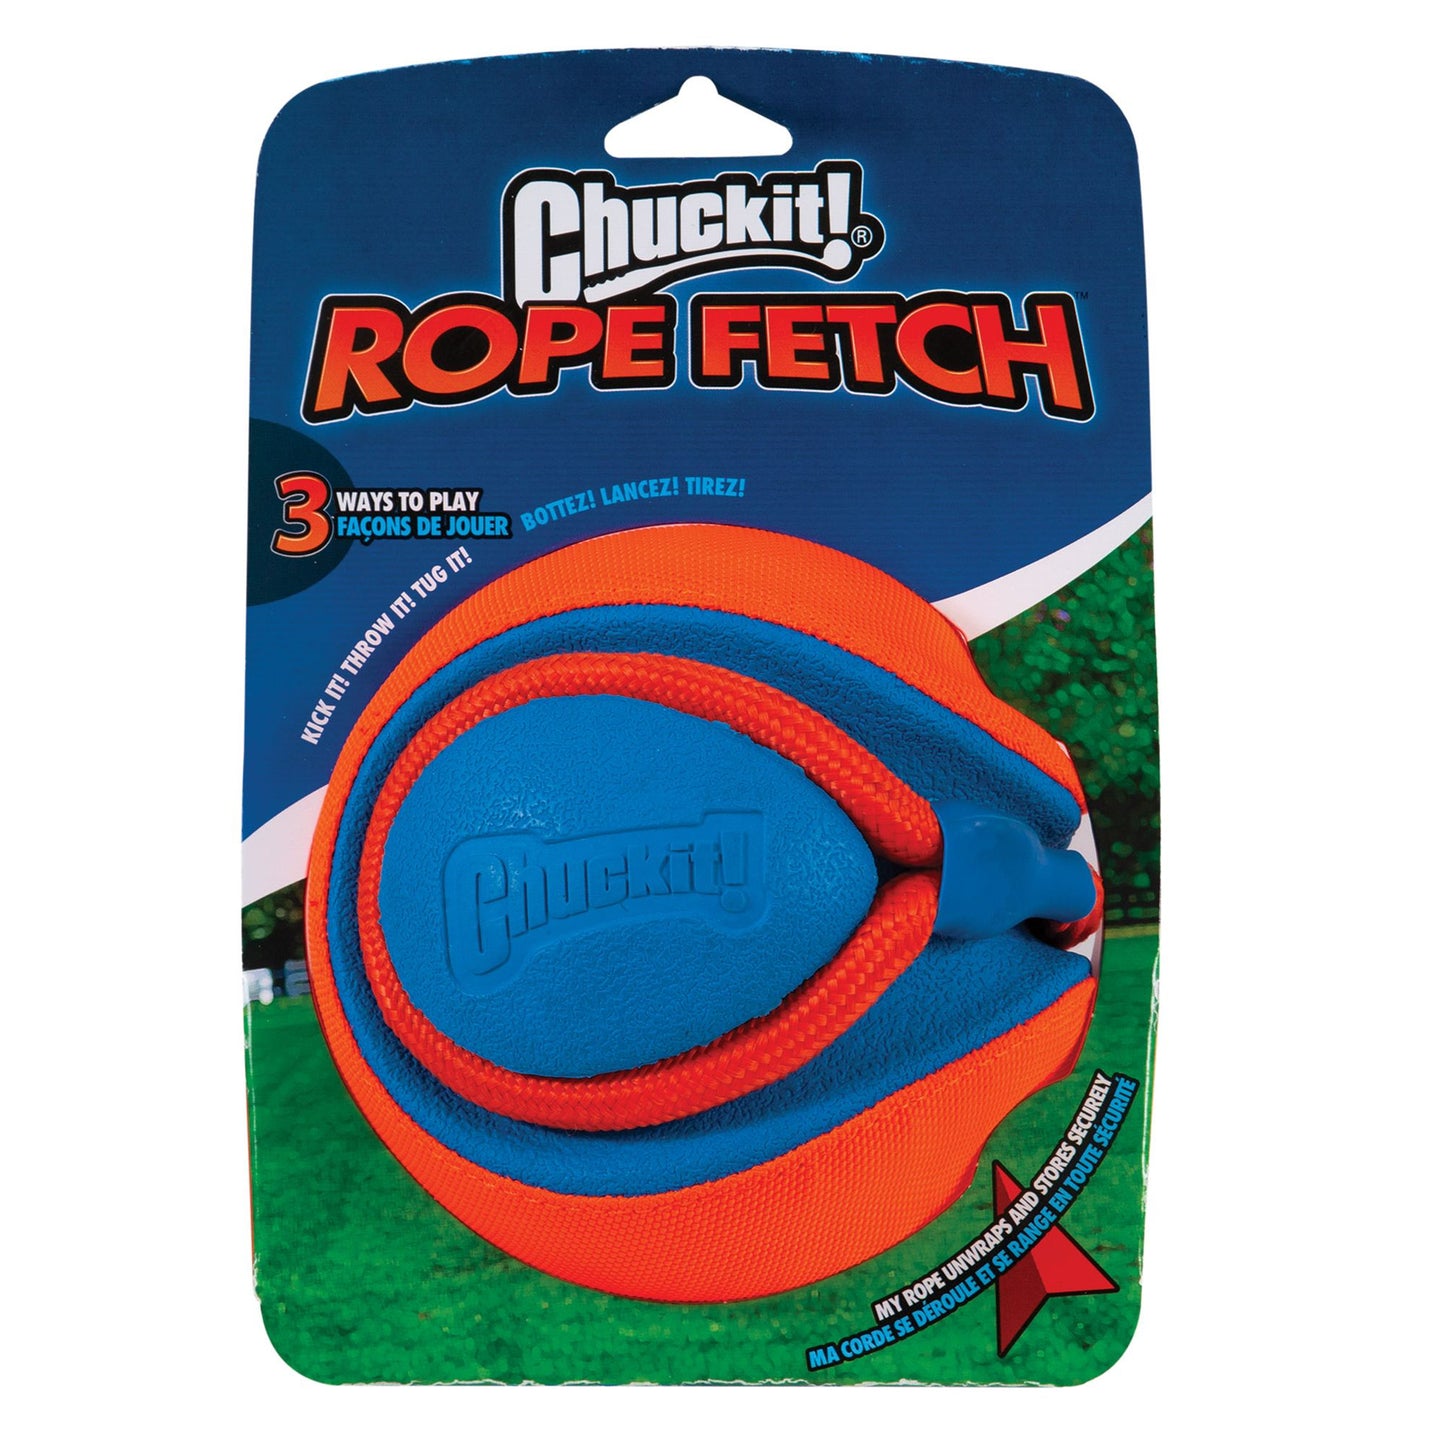 Chuckit - Rope Fetch Ball Dog Toy